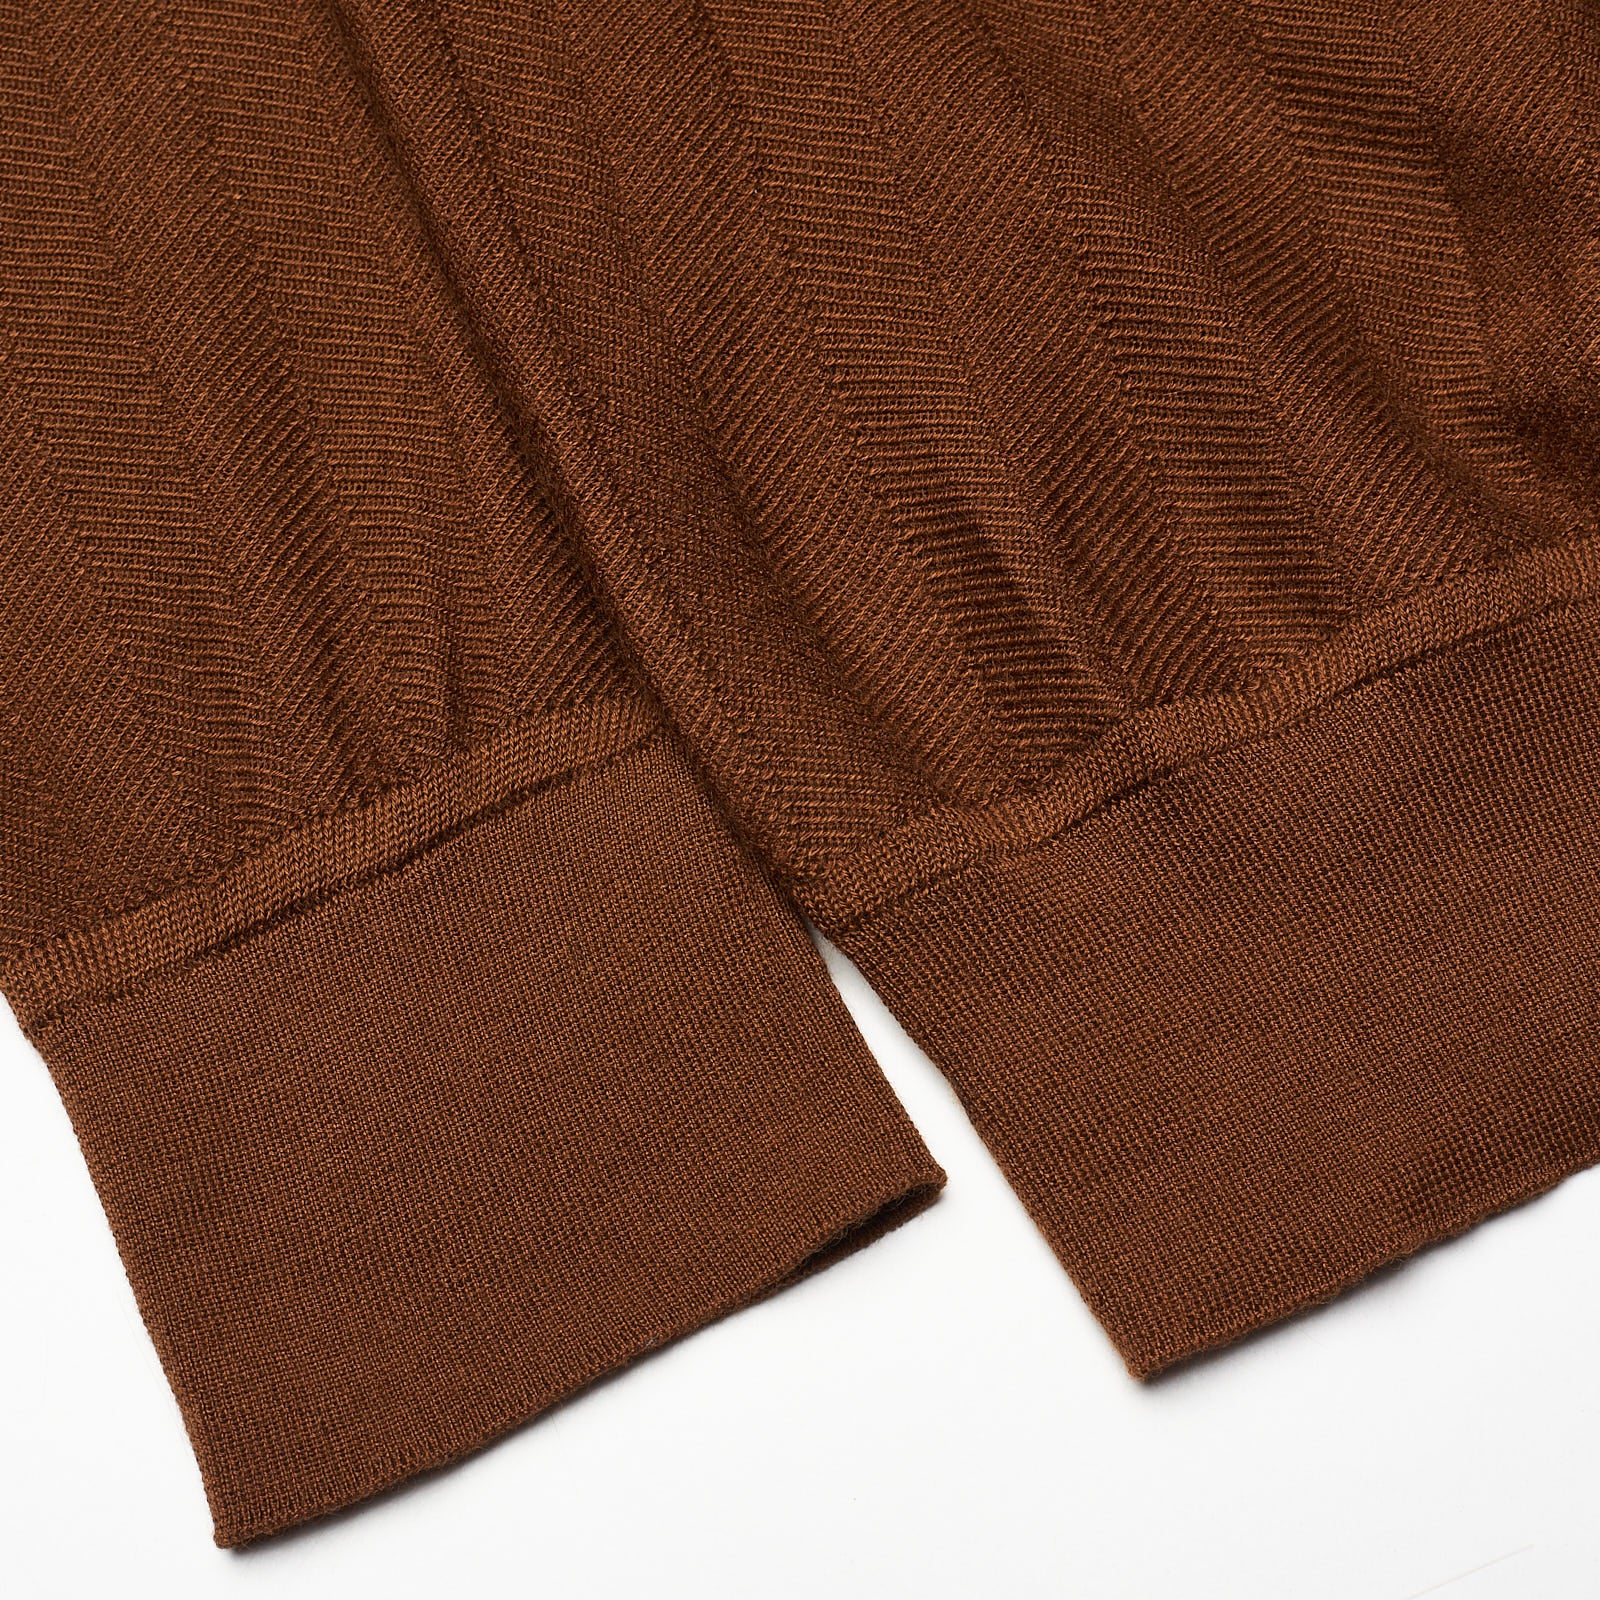 BERLUTI Paris Brown Herringbone Cashmere-Silk Knit Cardigan Sweater R50 NEW US M BERLUTI